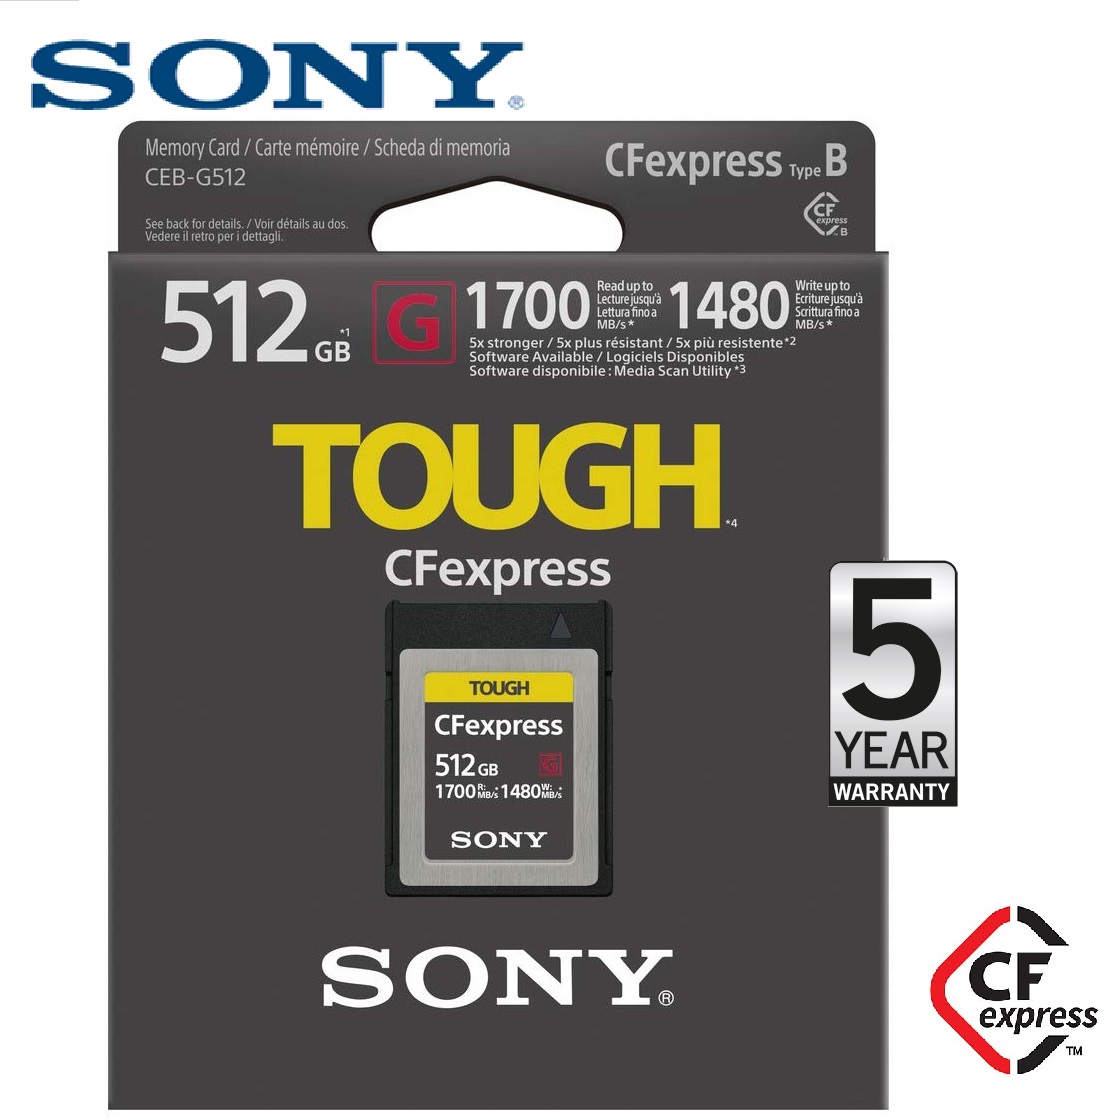 Sony 512GB CF Express Type B TOUGH